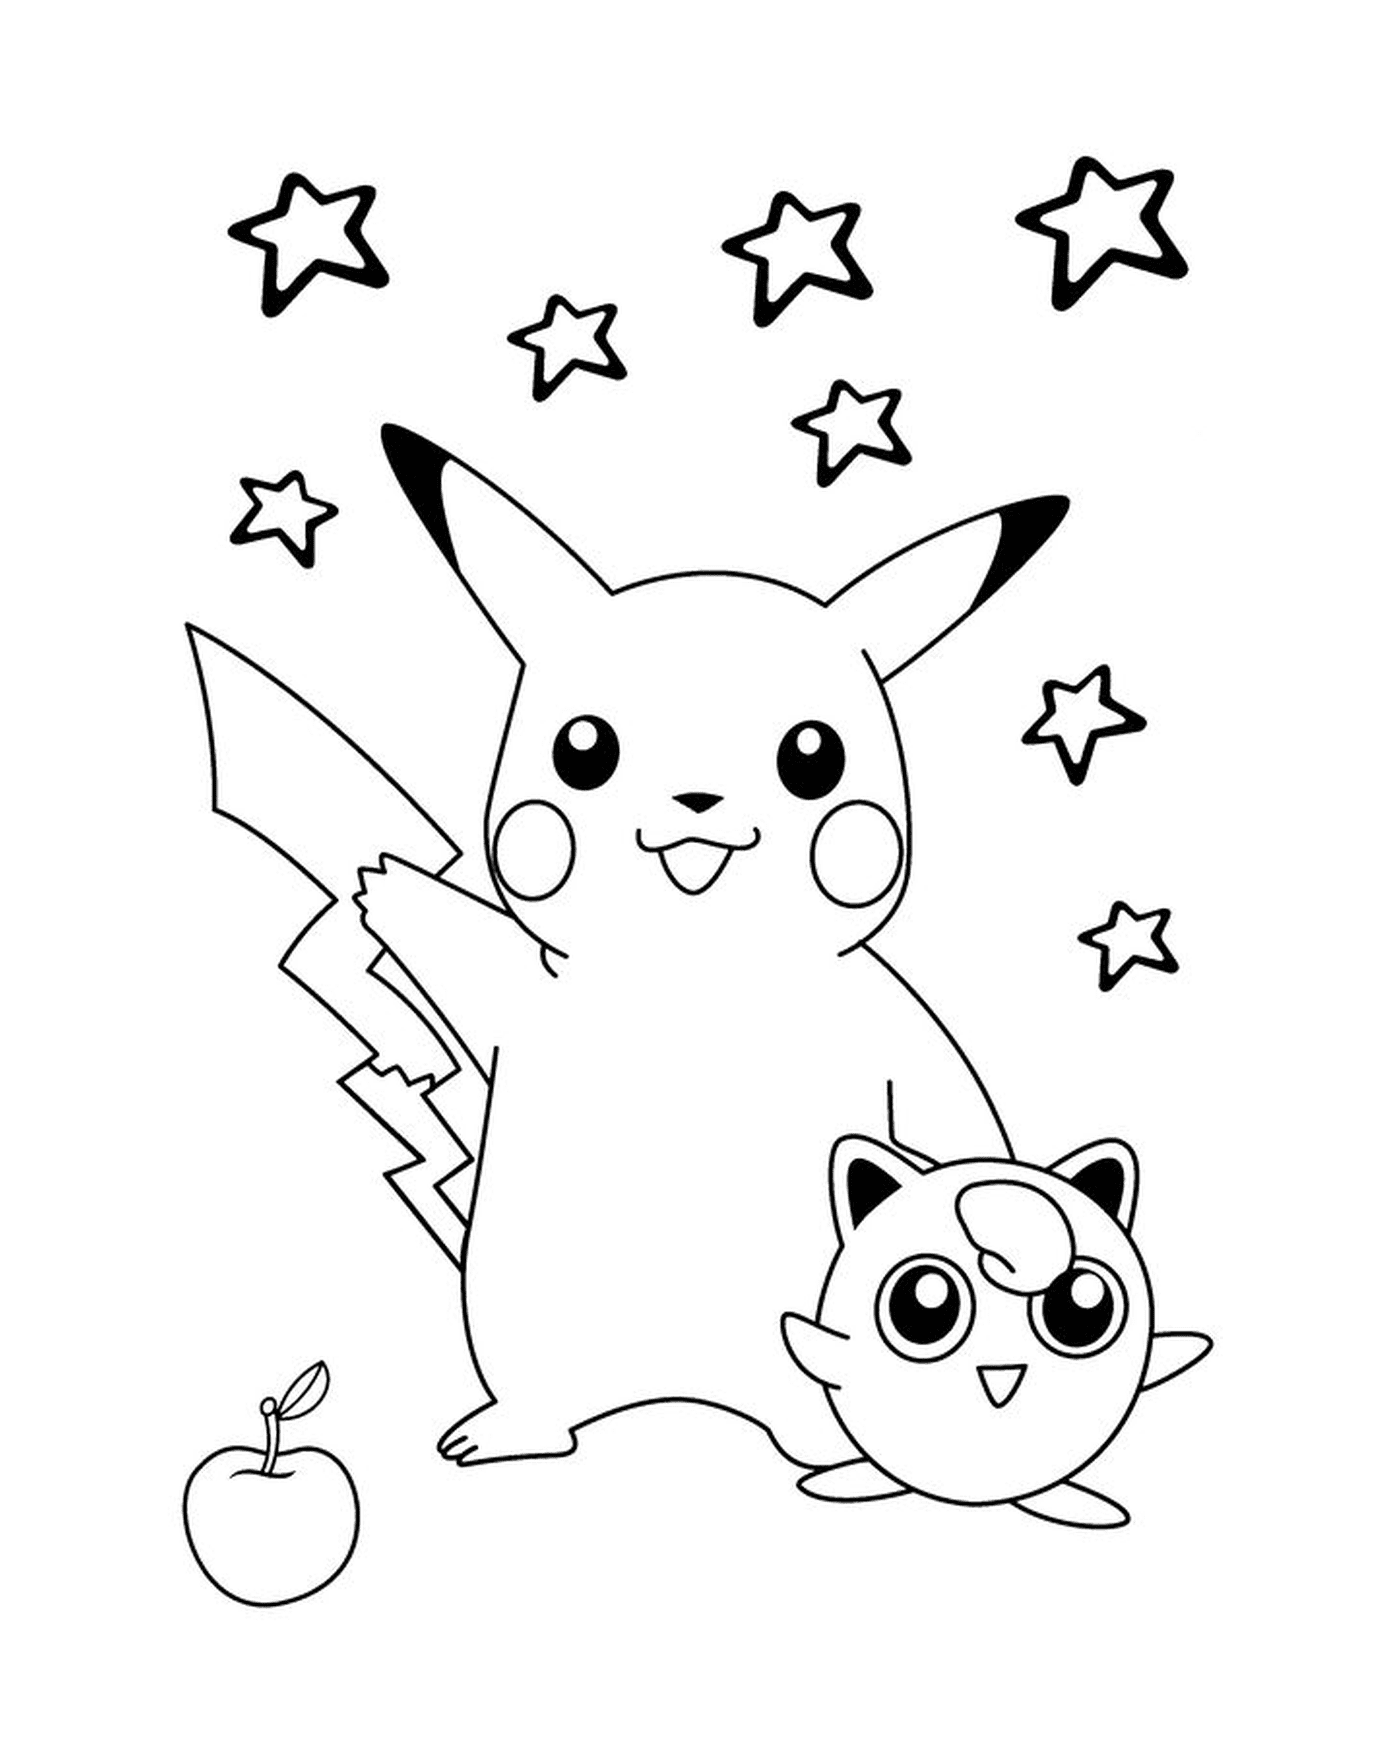   Pikachu et un chat câlin 